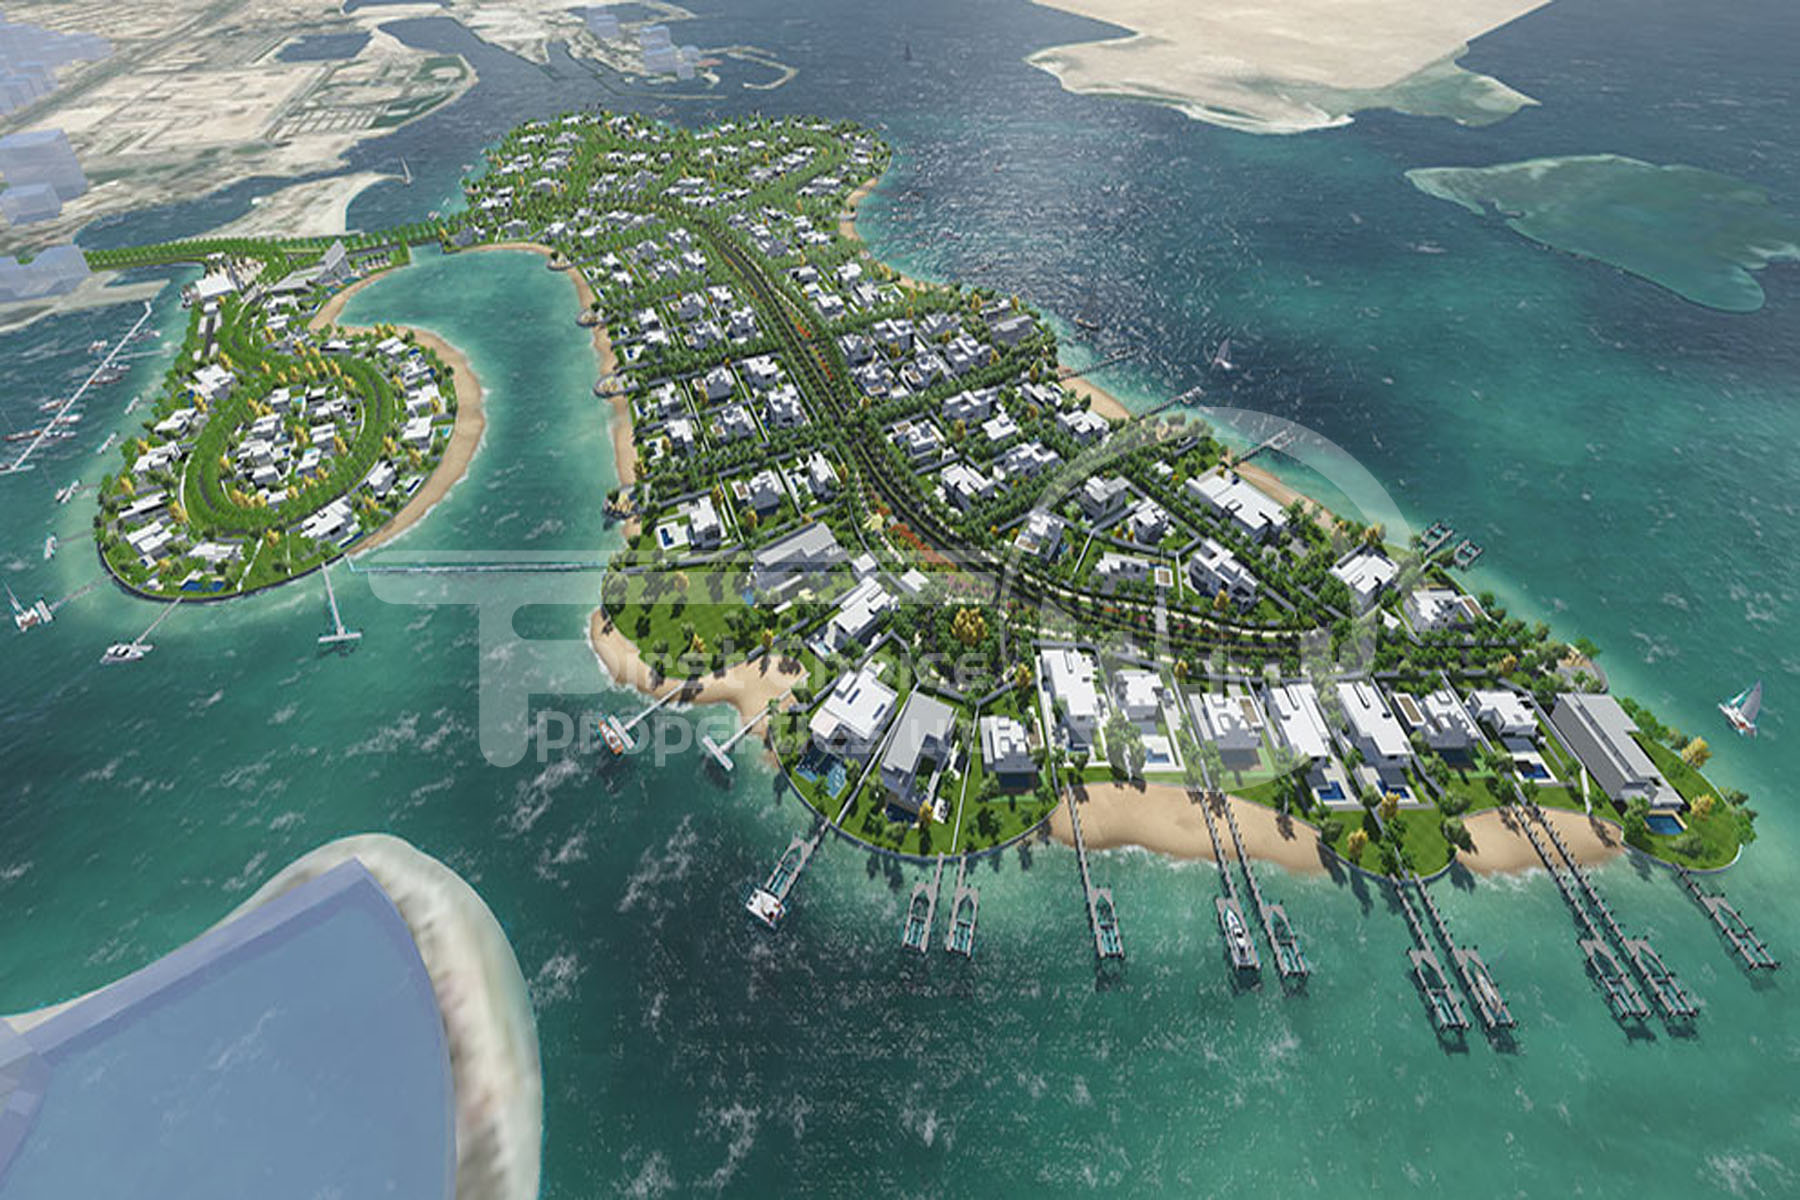 Residential Island - Nareel Island - Al Bateen - Abu Dhabi - UAE (14).jpg